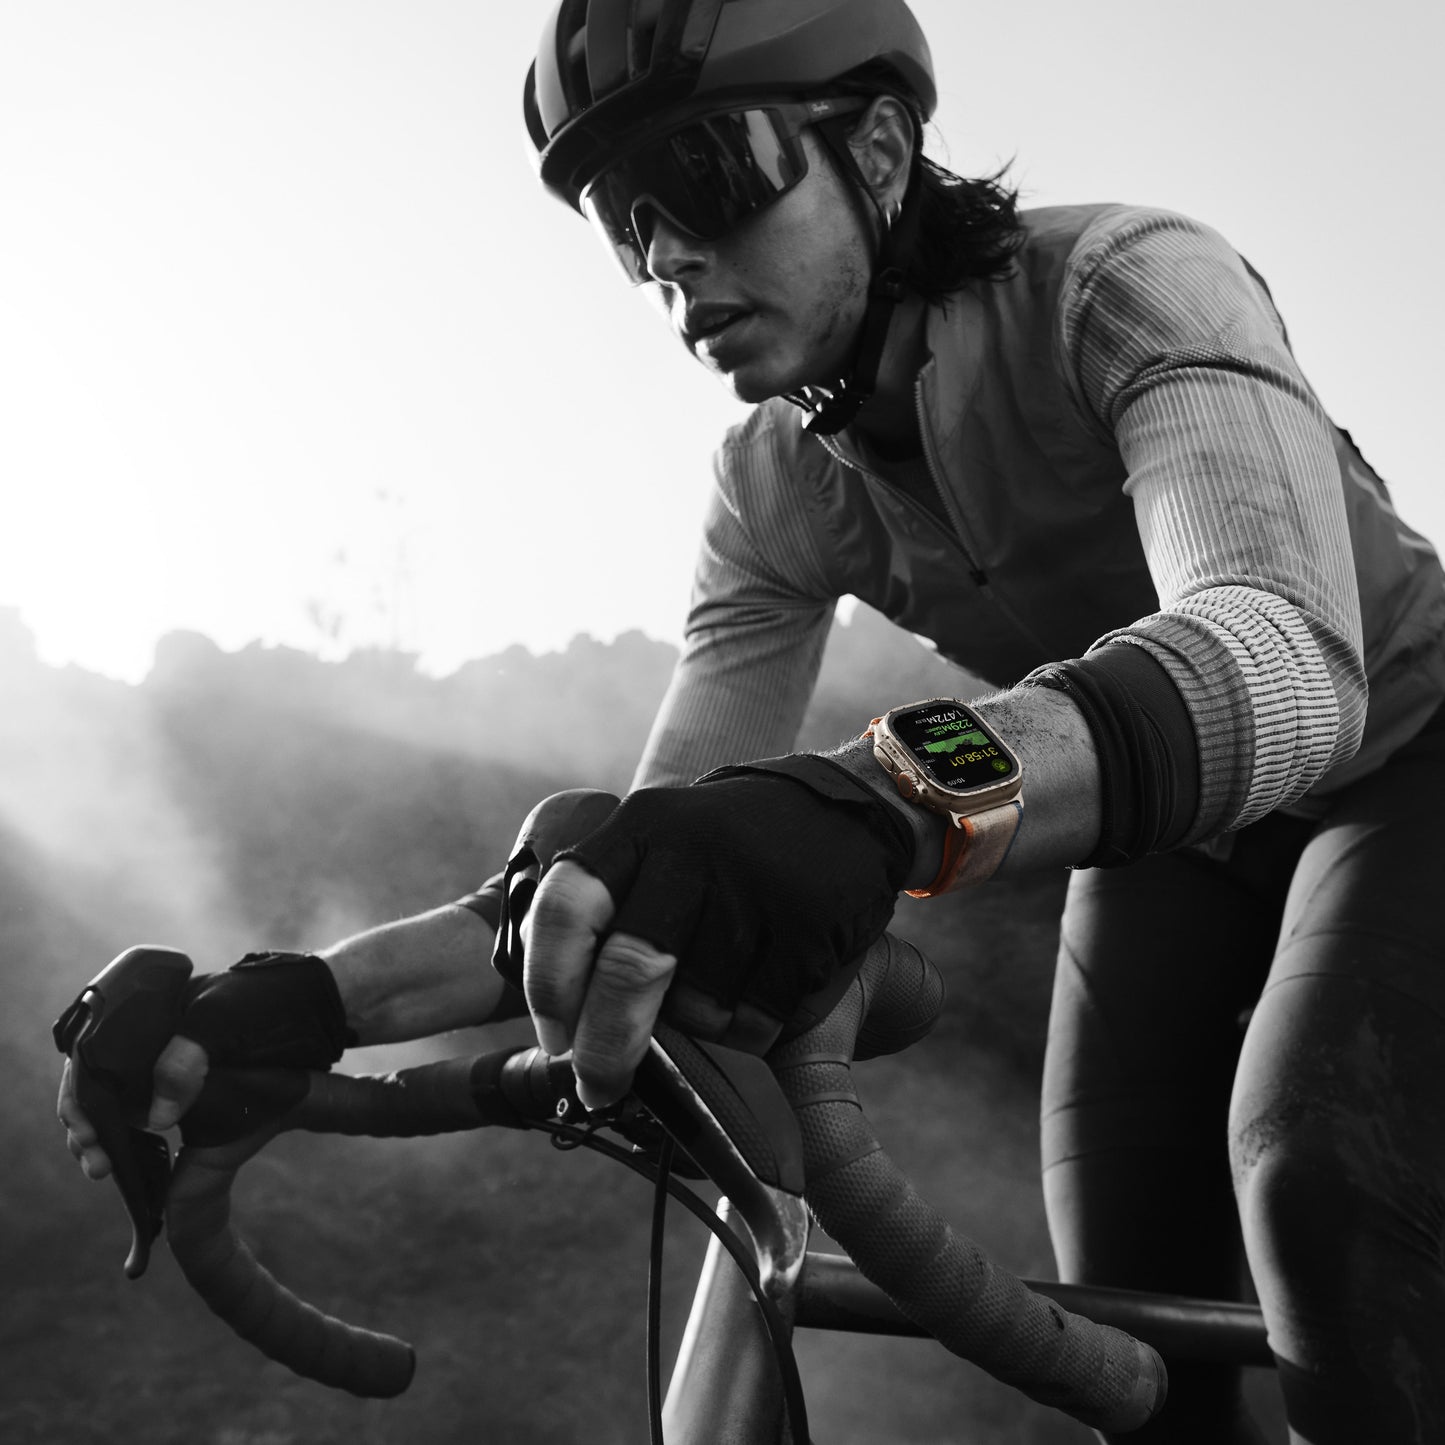 Apple Watch Ultra 2 GPS + Cellular 49mm Titanium Case with Indigo Alpine Loop - Large